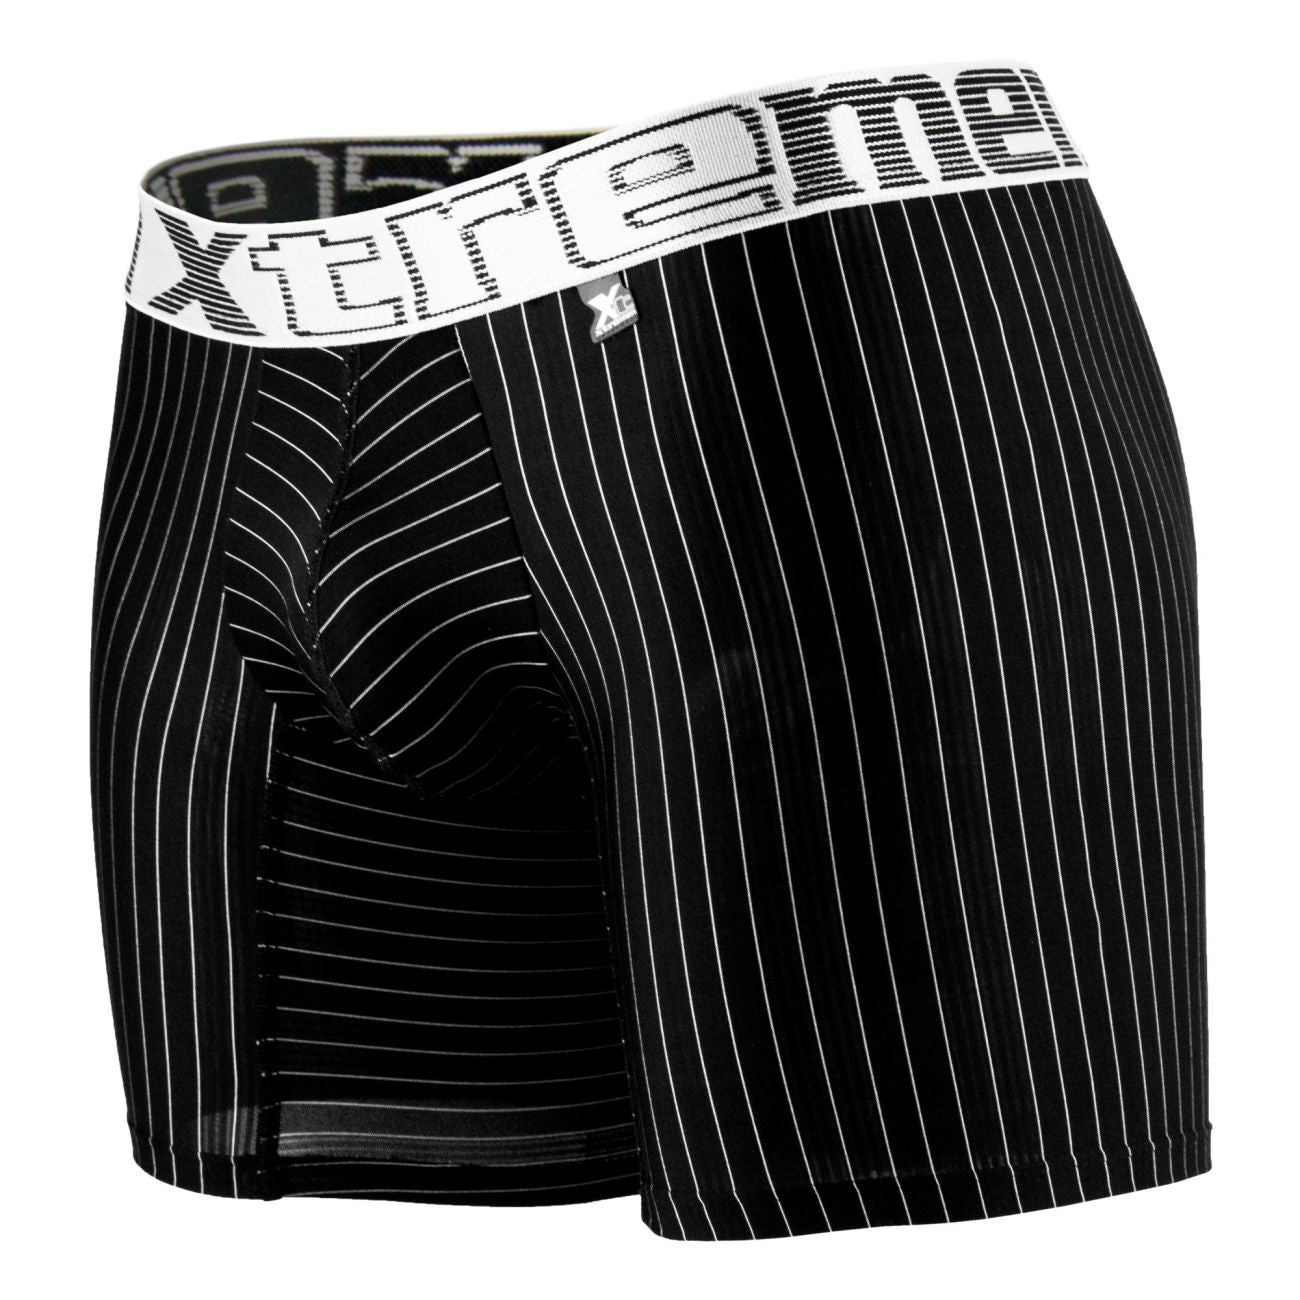 Xtremen 51419 Boxer Briefs Microfiber Stripes